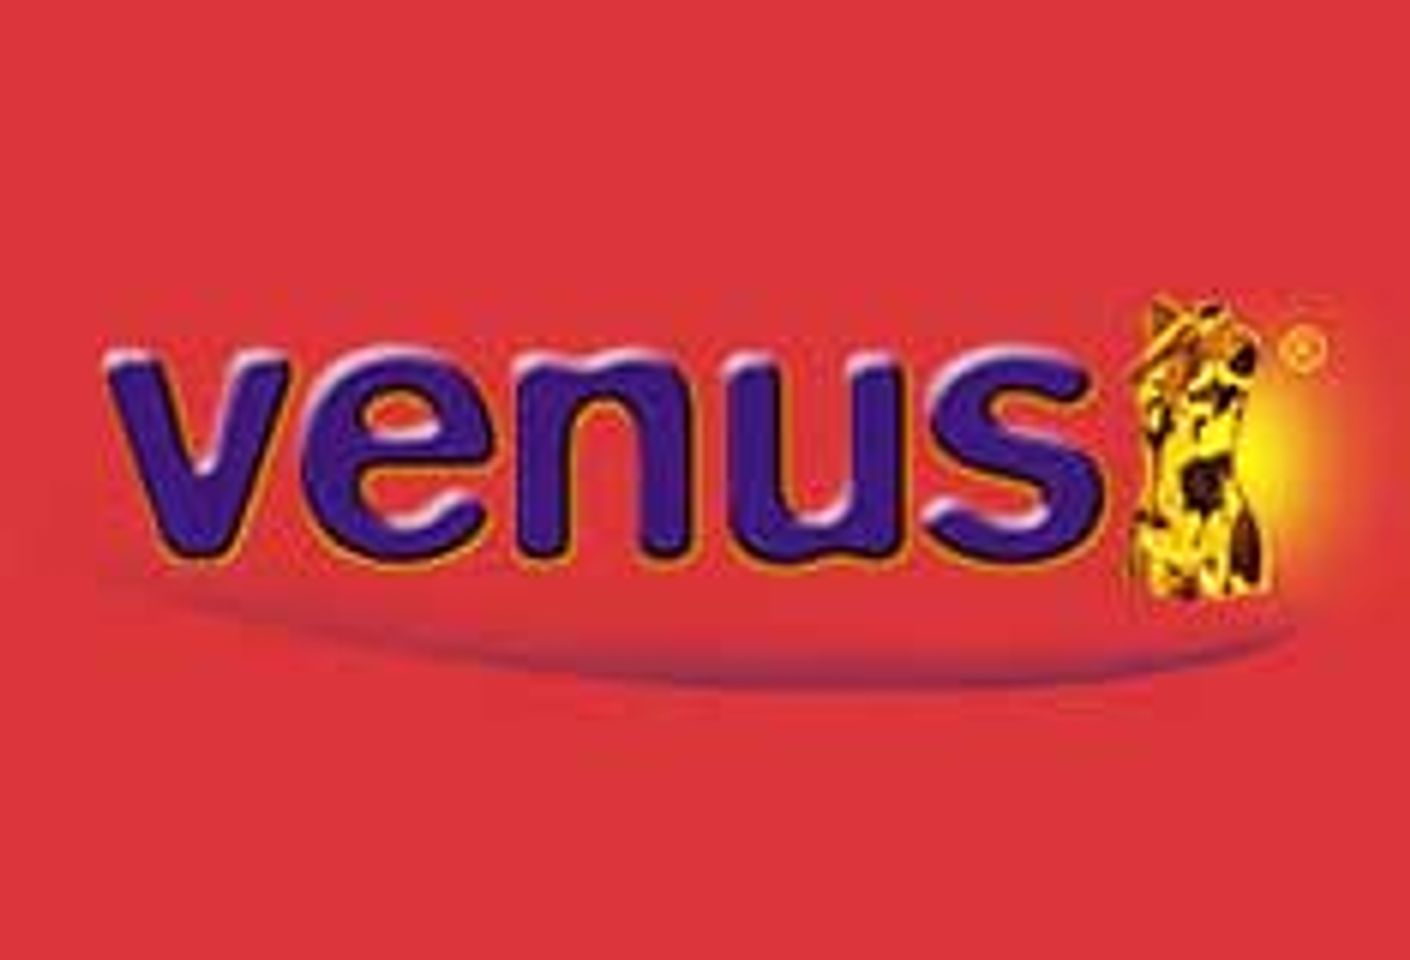 Venus Paris Expo Cancelled